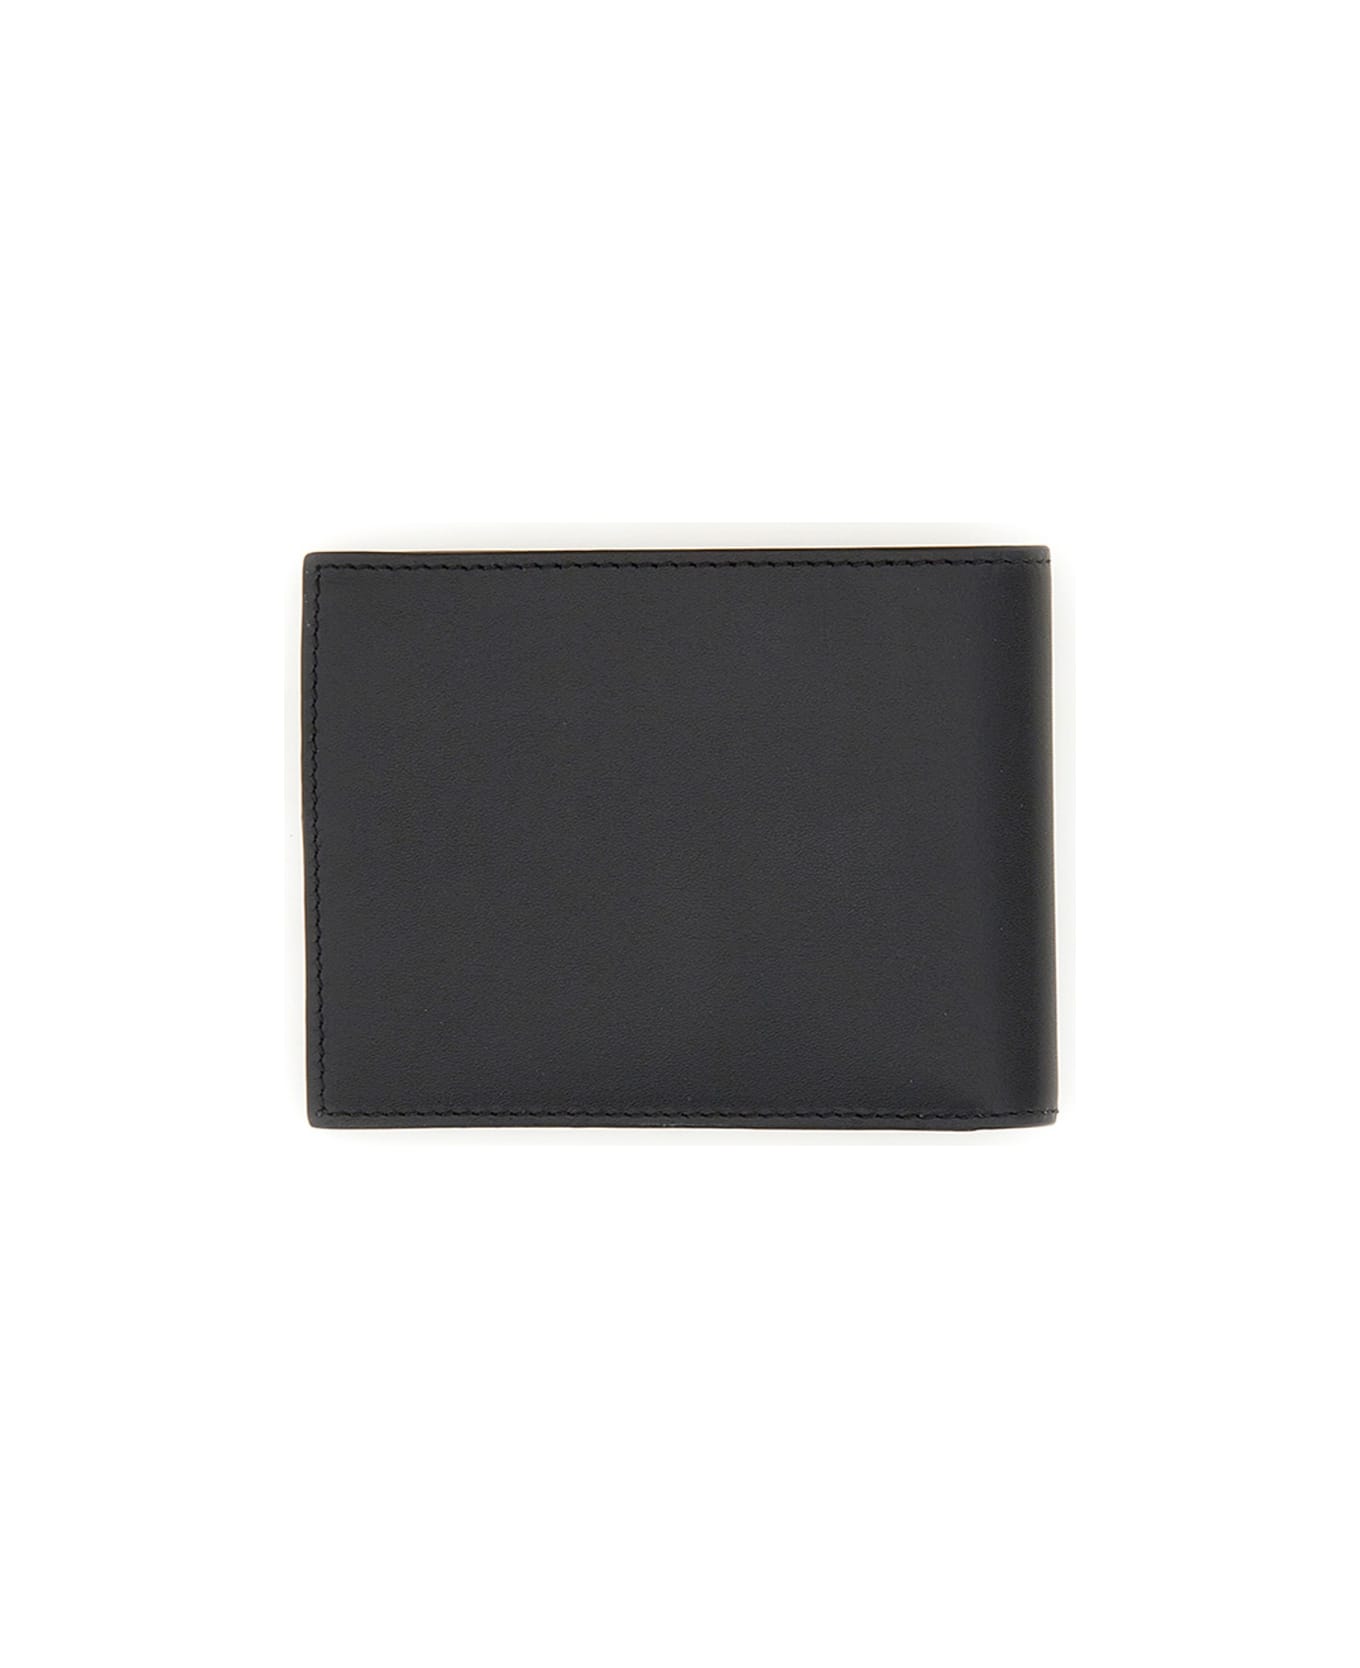 Paul Smith Bi-fold Leather Wallet - BLACK 財布